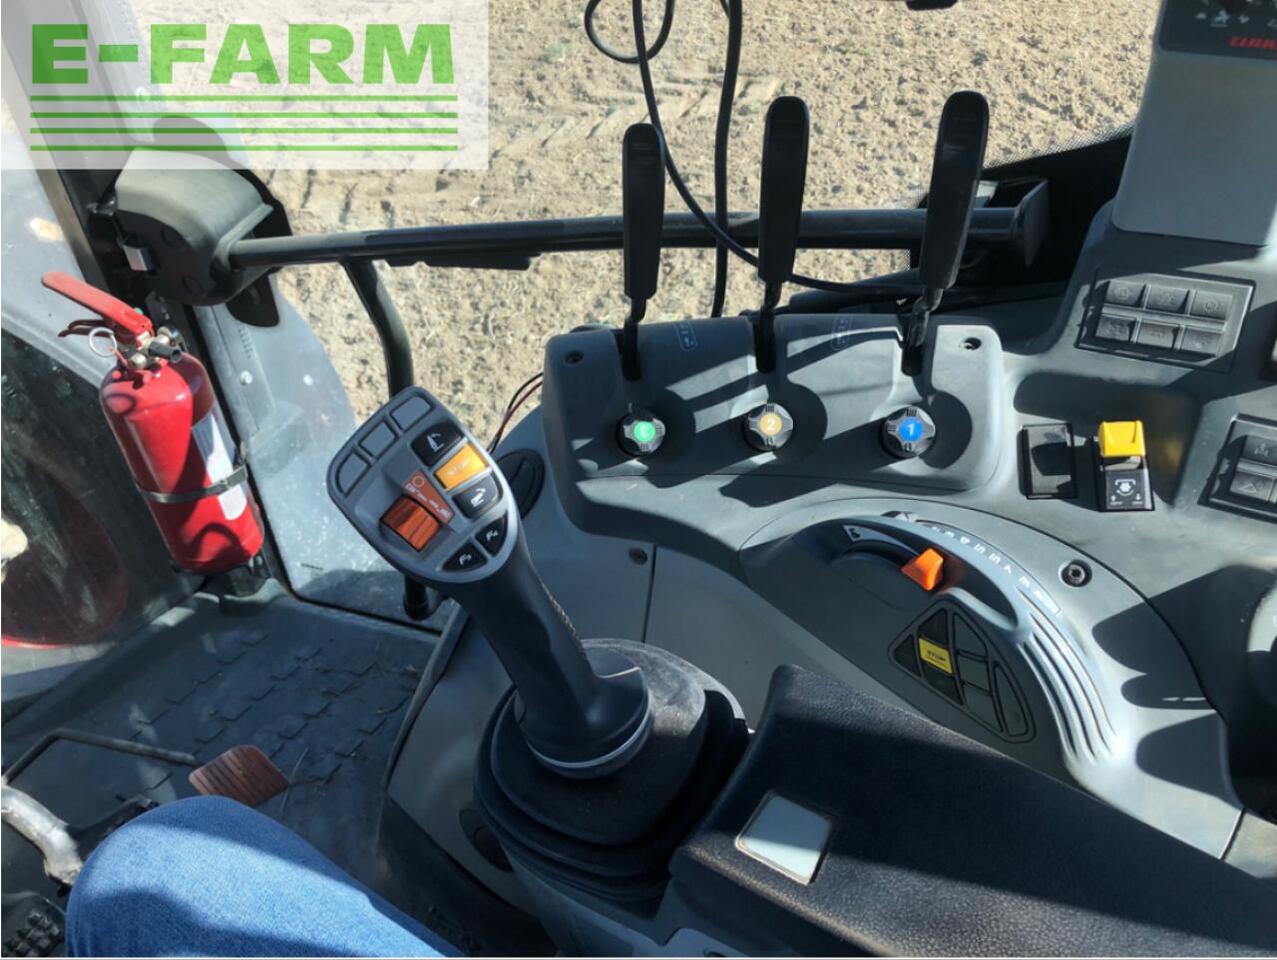 Farm tractor CLAAS arion 460 (a43/300)